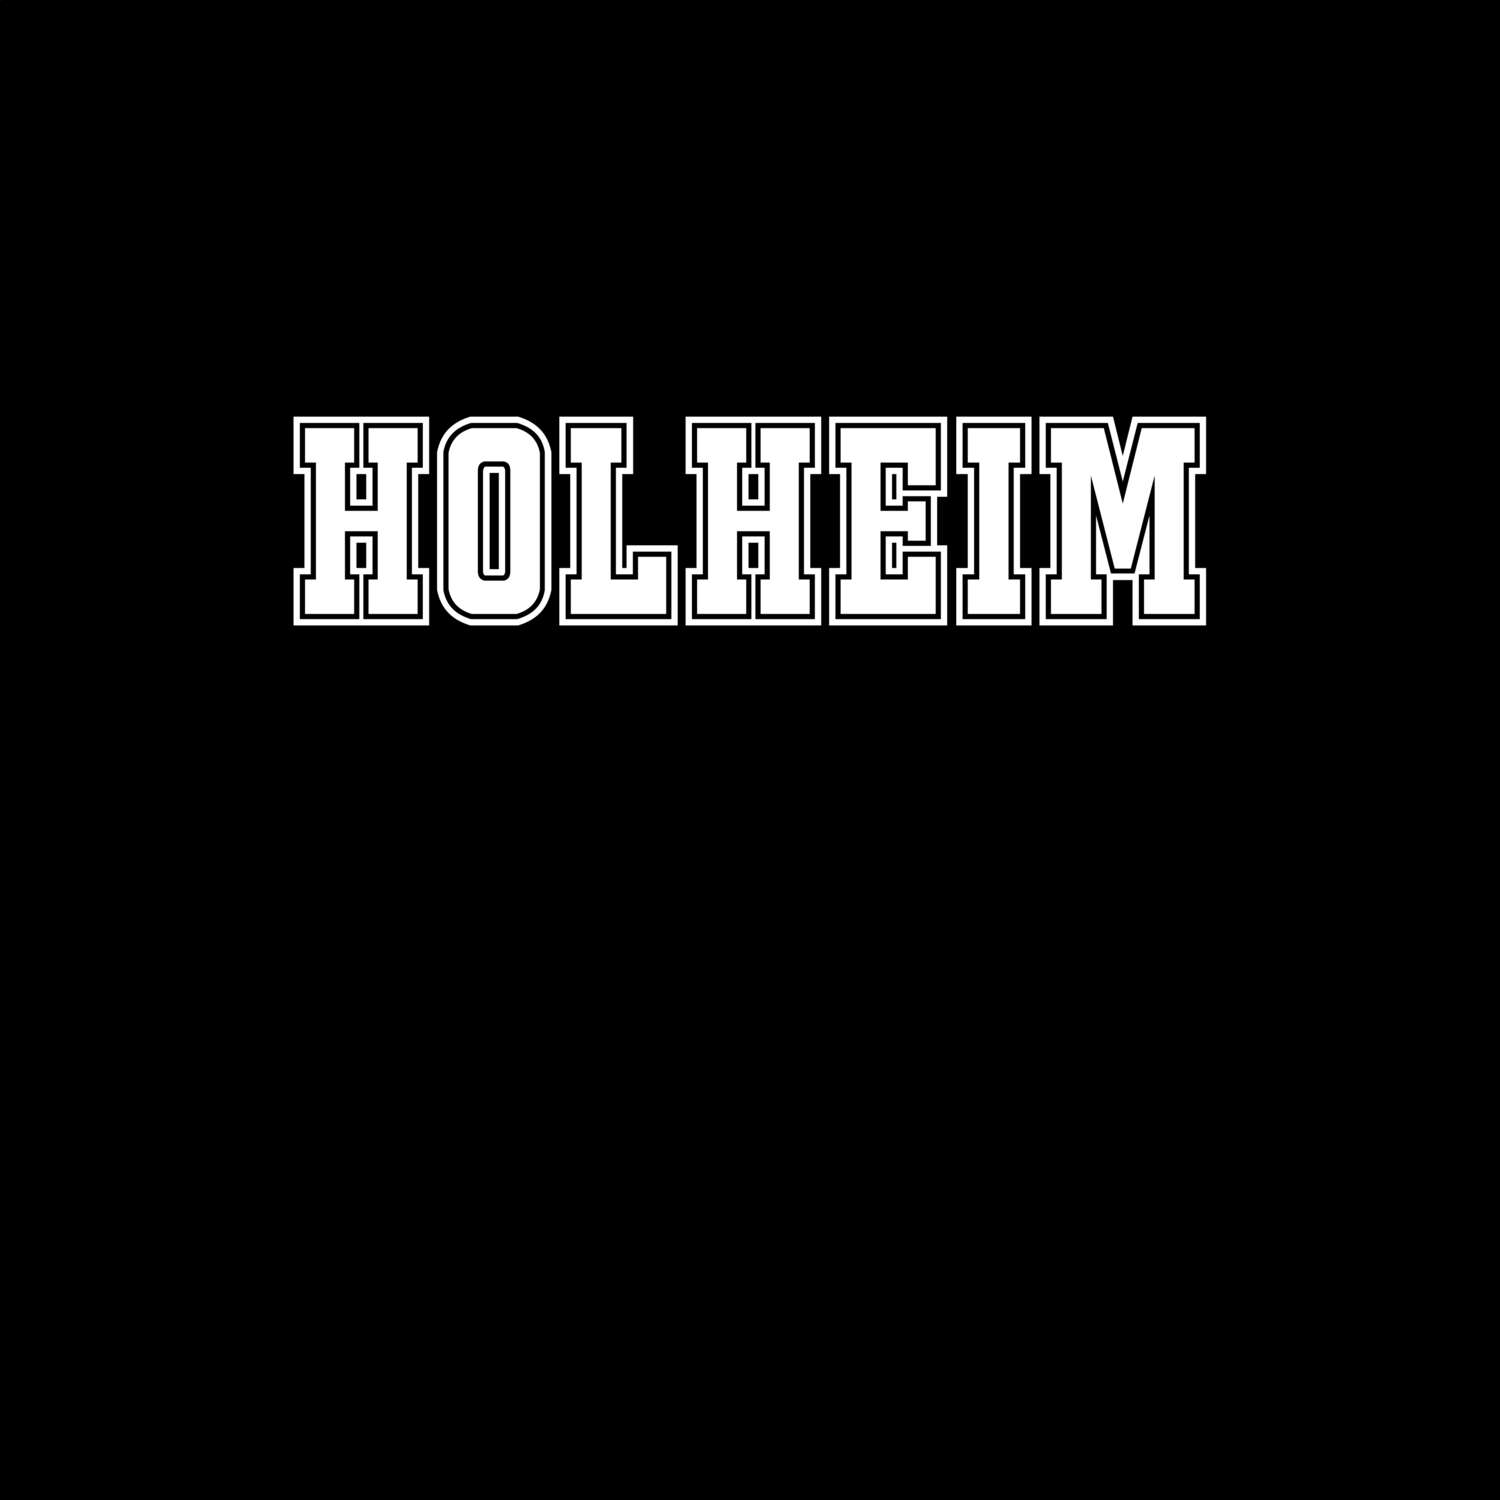 Holheim T-Shirt »Classic«